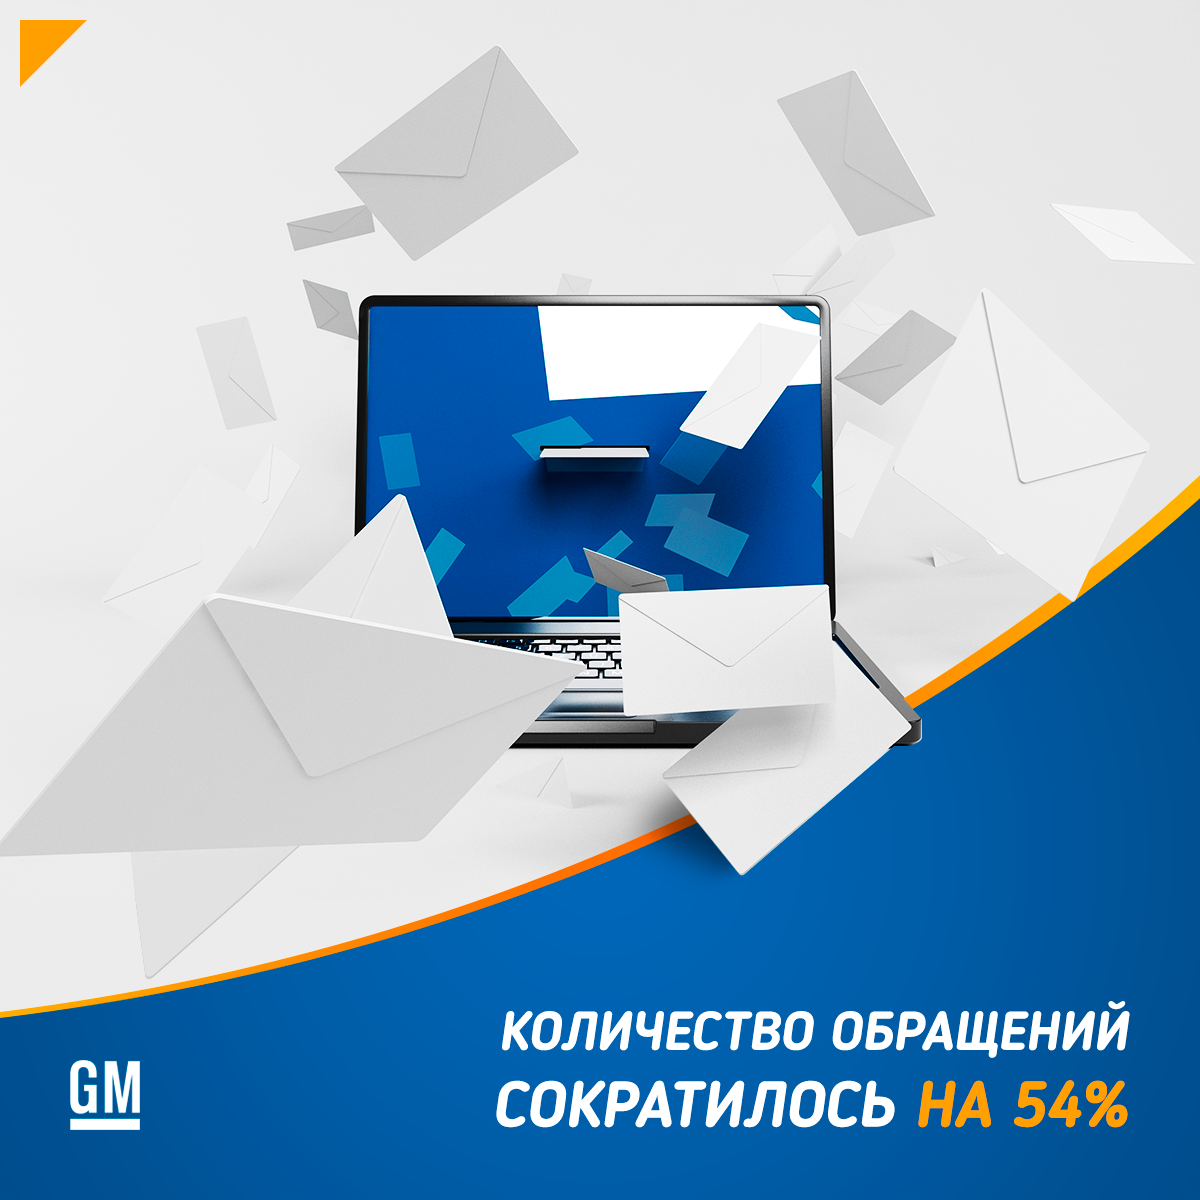 Количество обращений в GM Uzbekistan сократилось на 54 процента